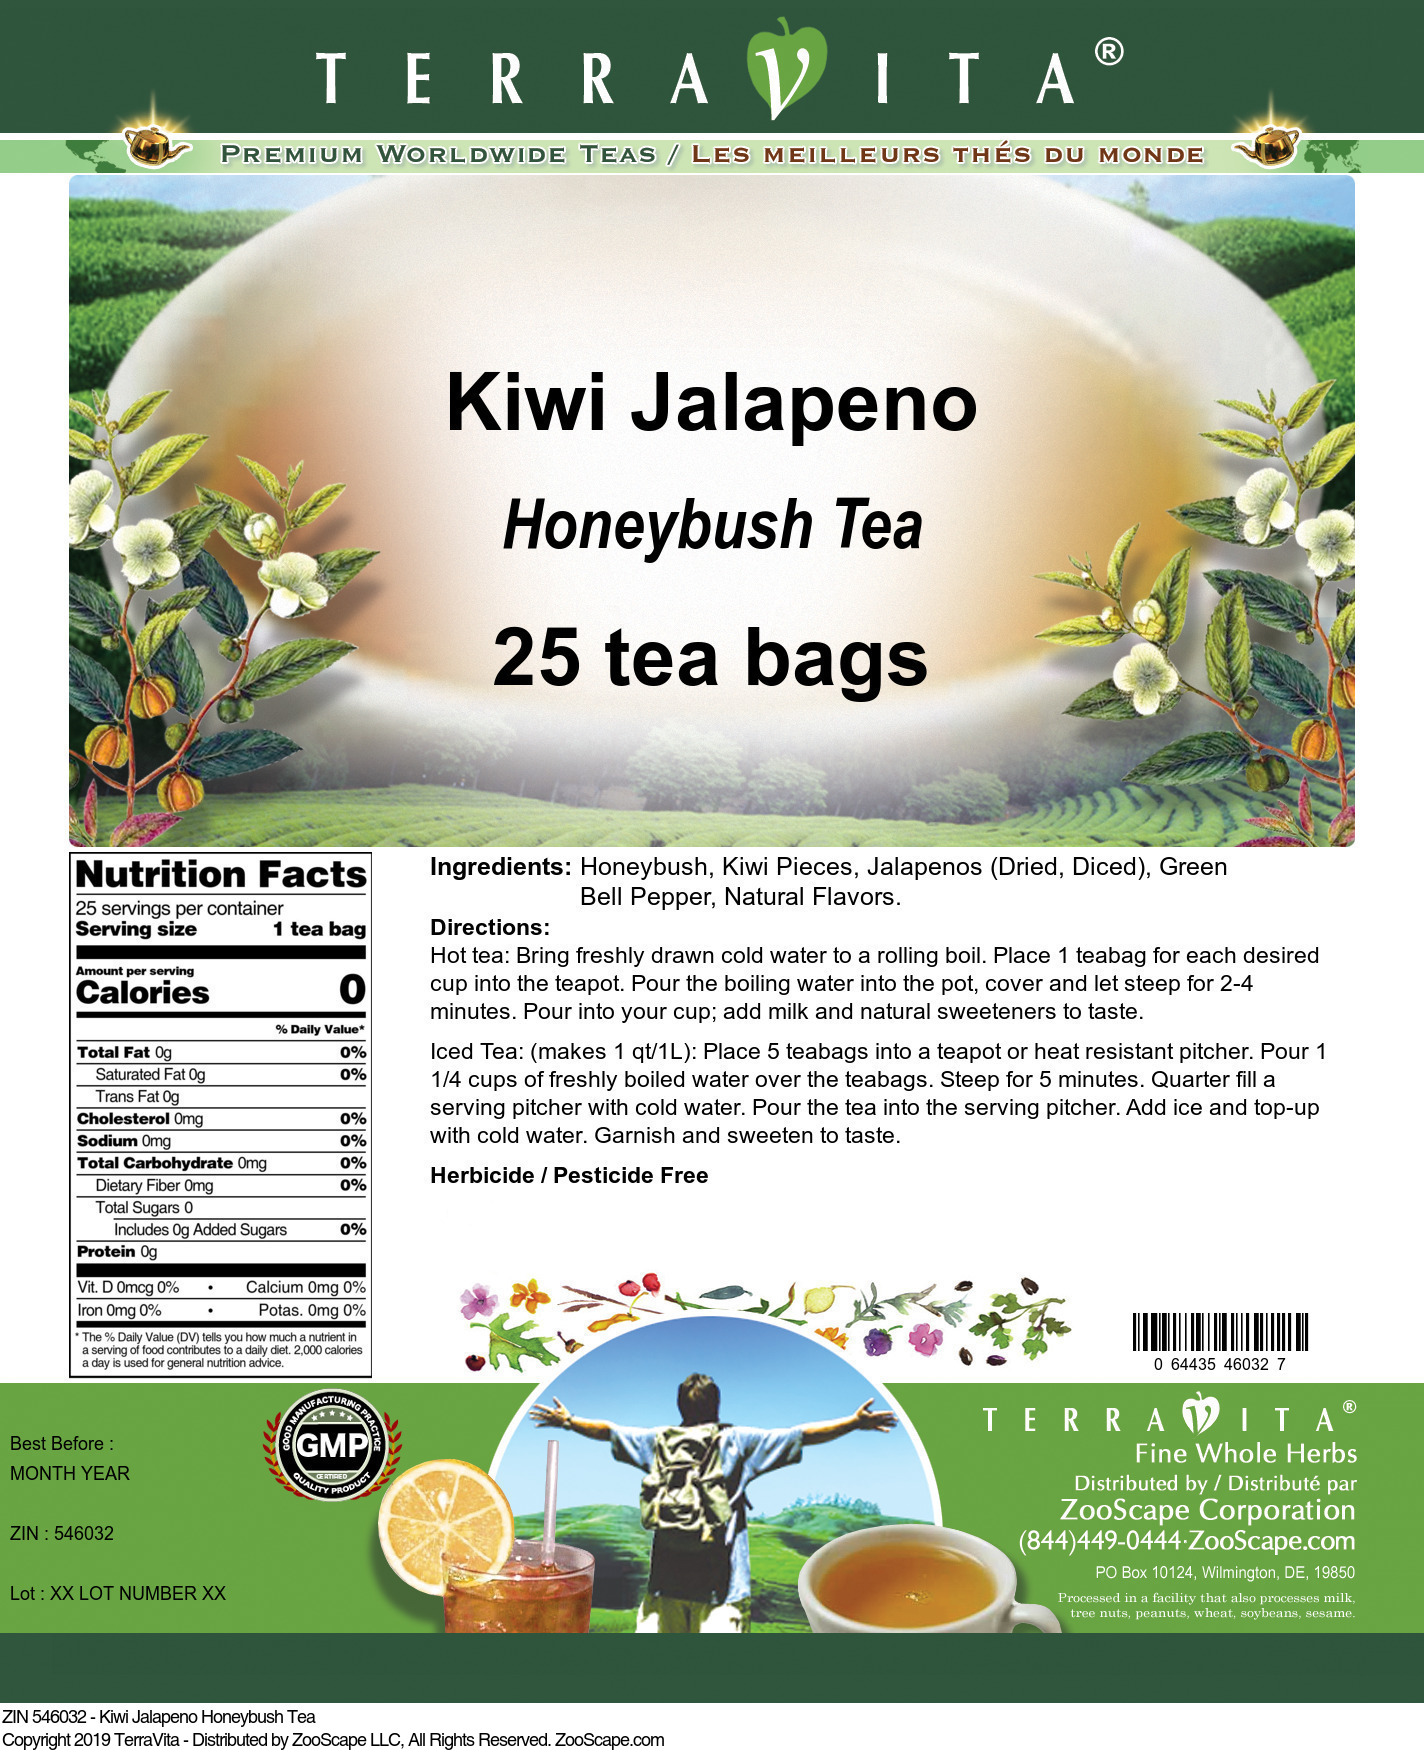 Kiwi Jalapeno Honeybush Tea - Label